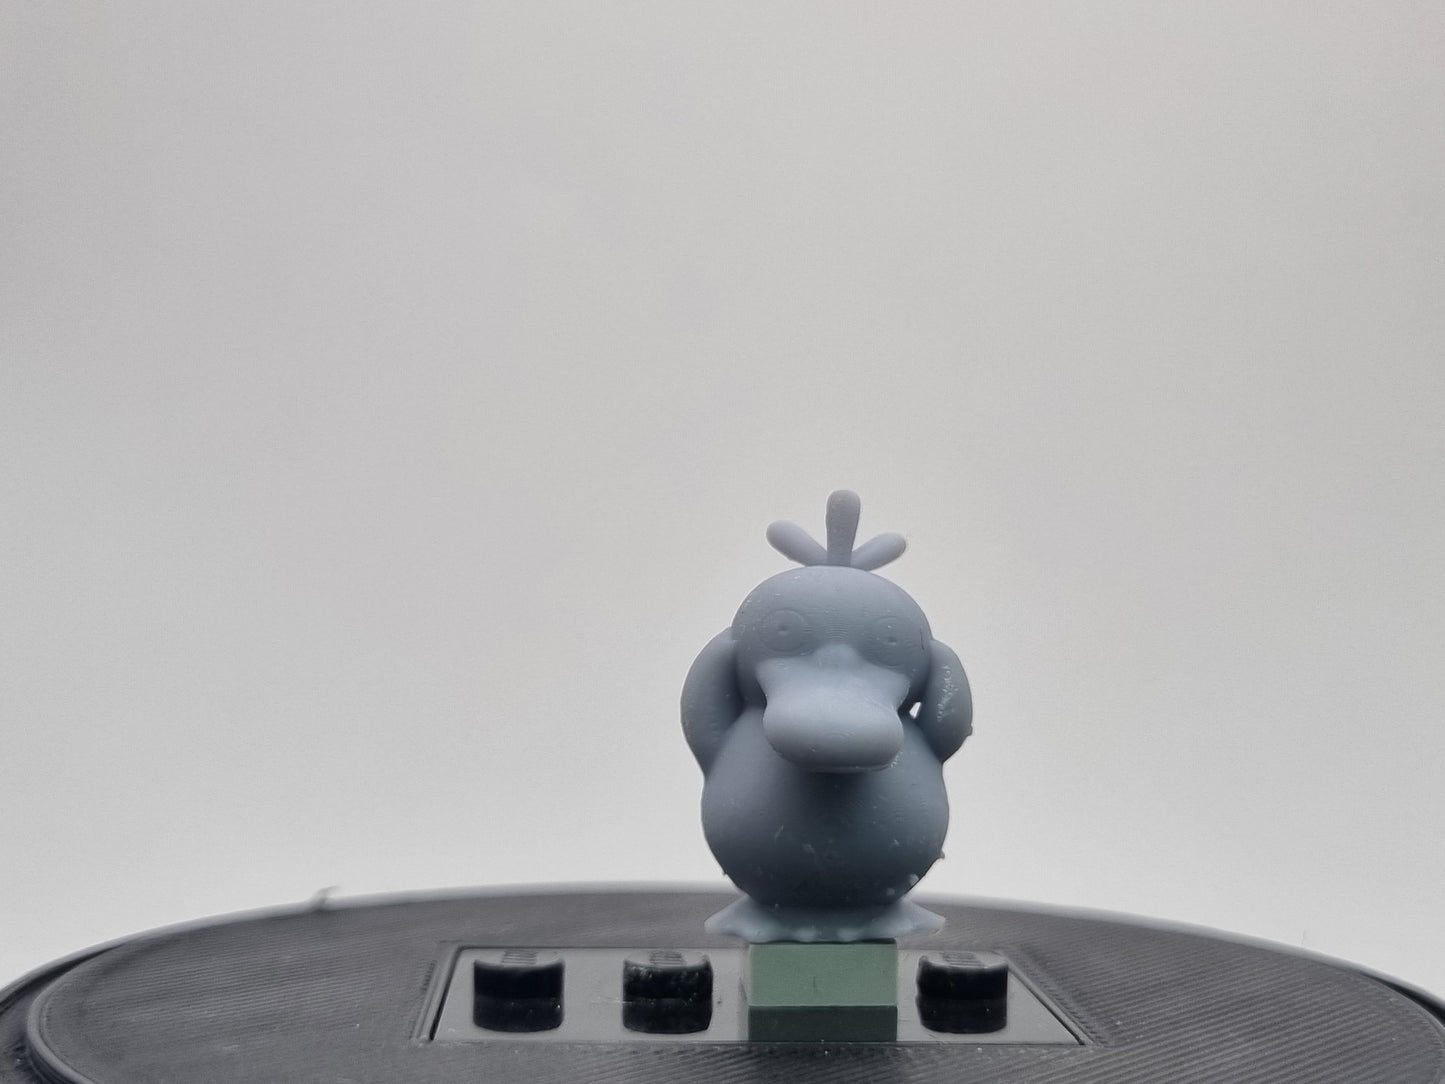 Building toy custom 3D printed duck animal with a headache!